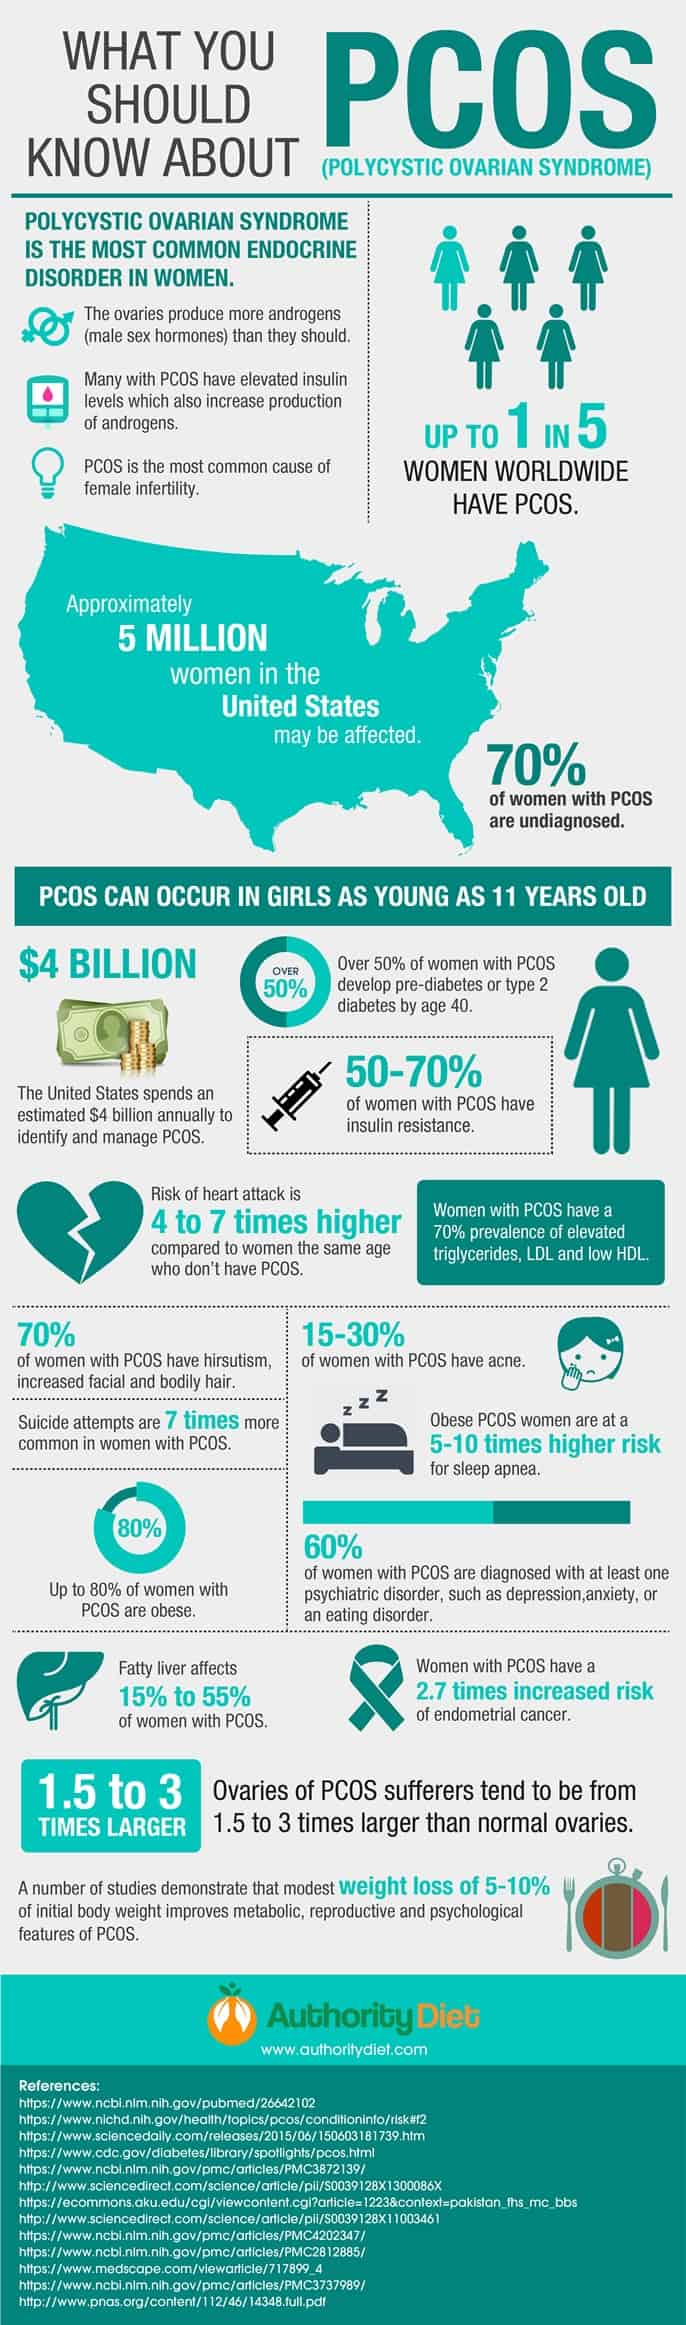 PCOS infographic